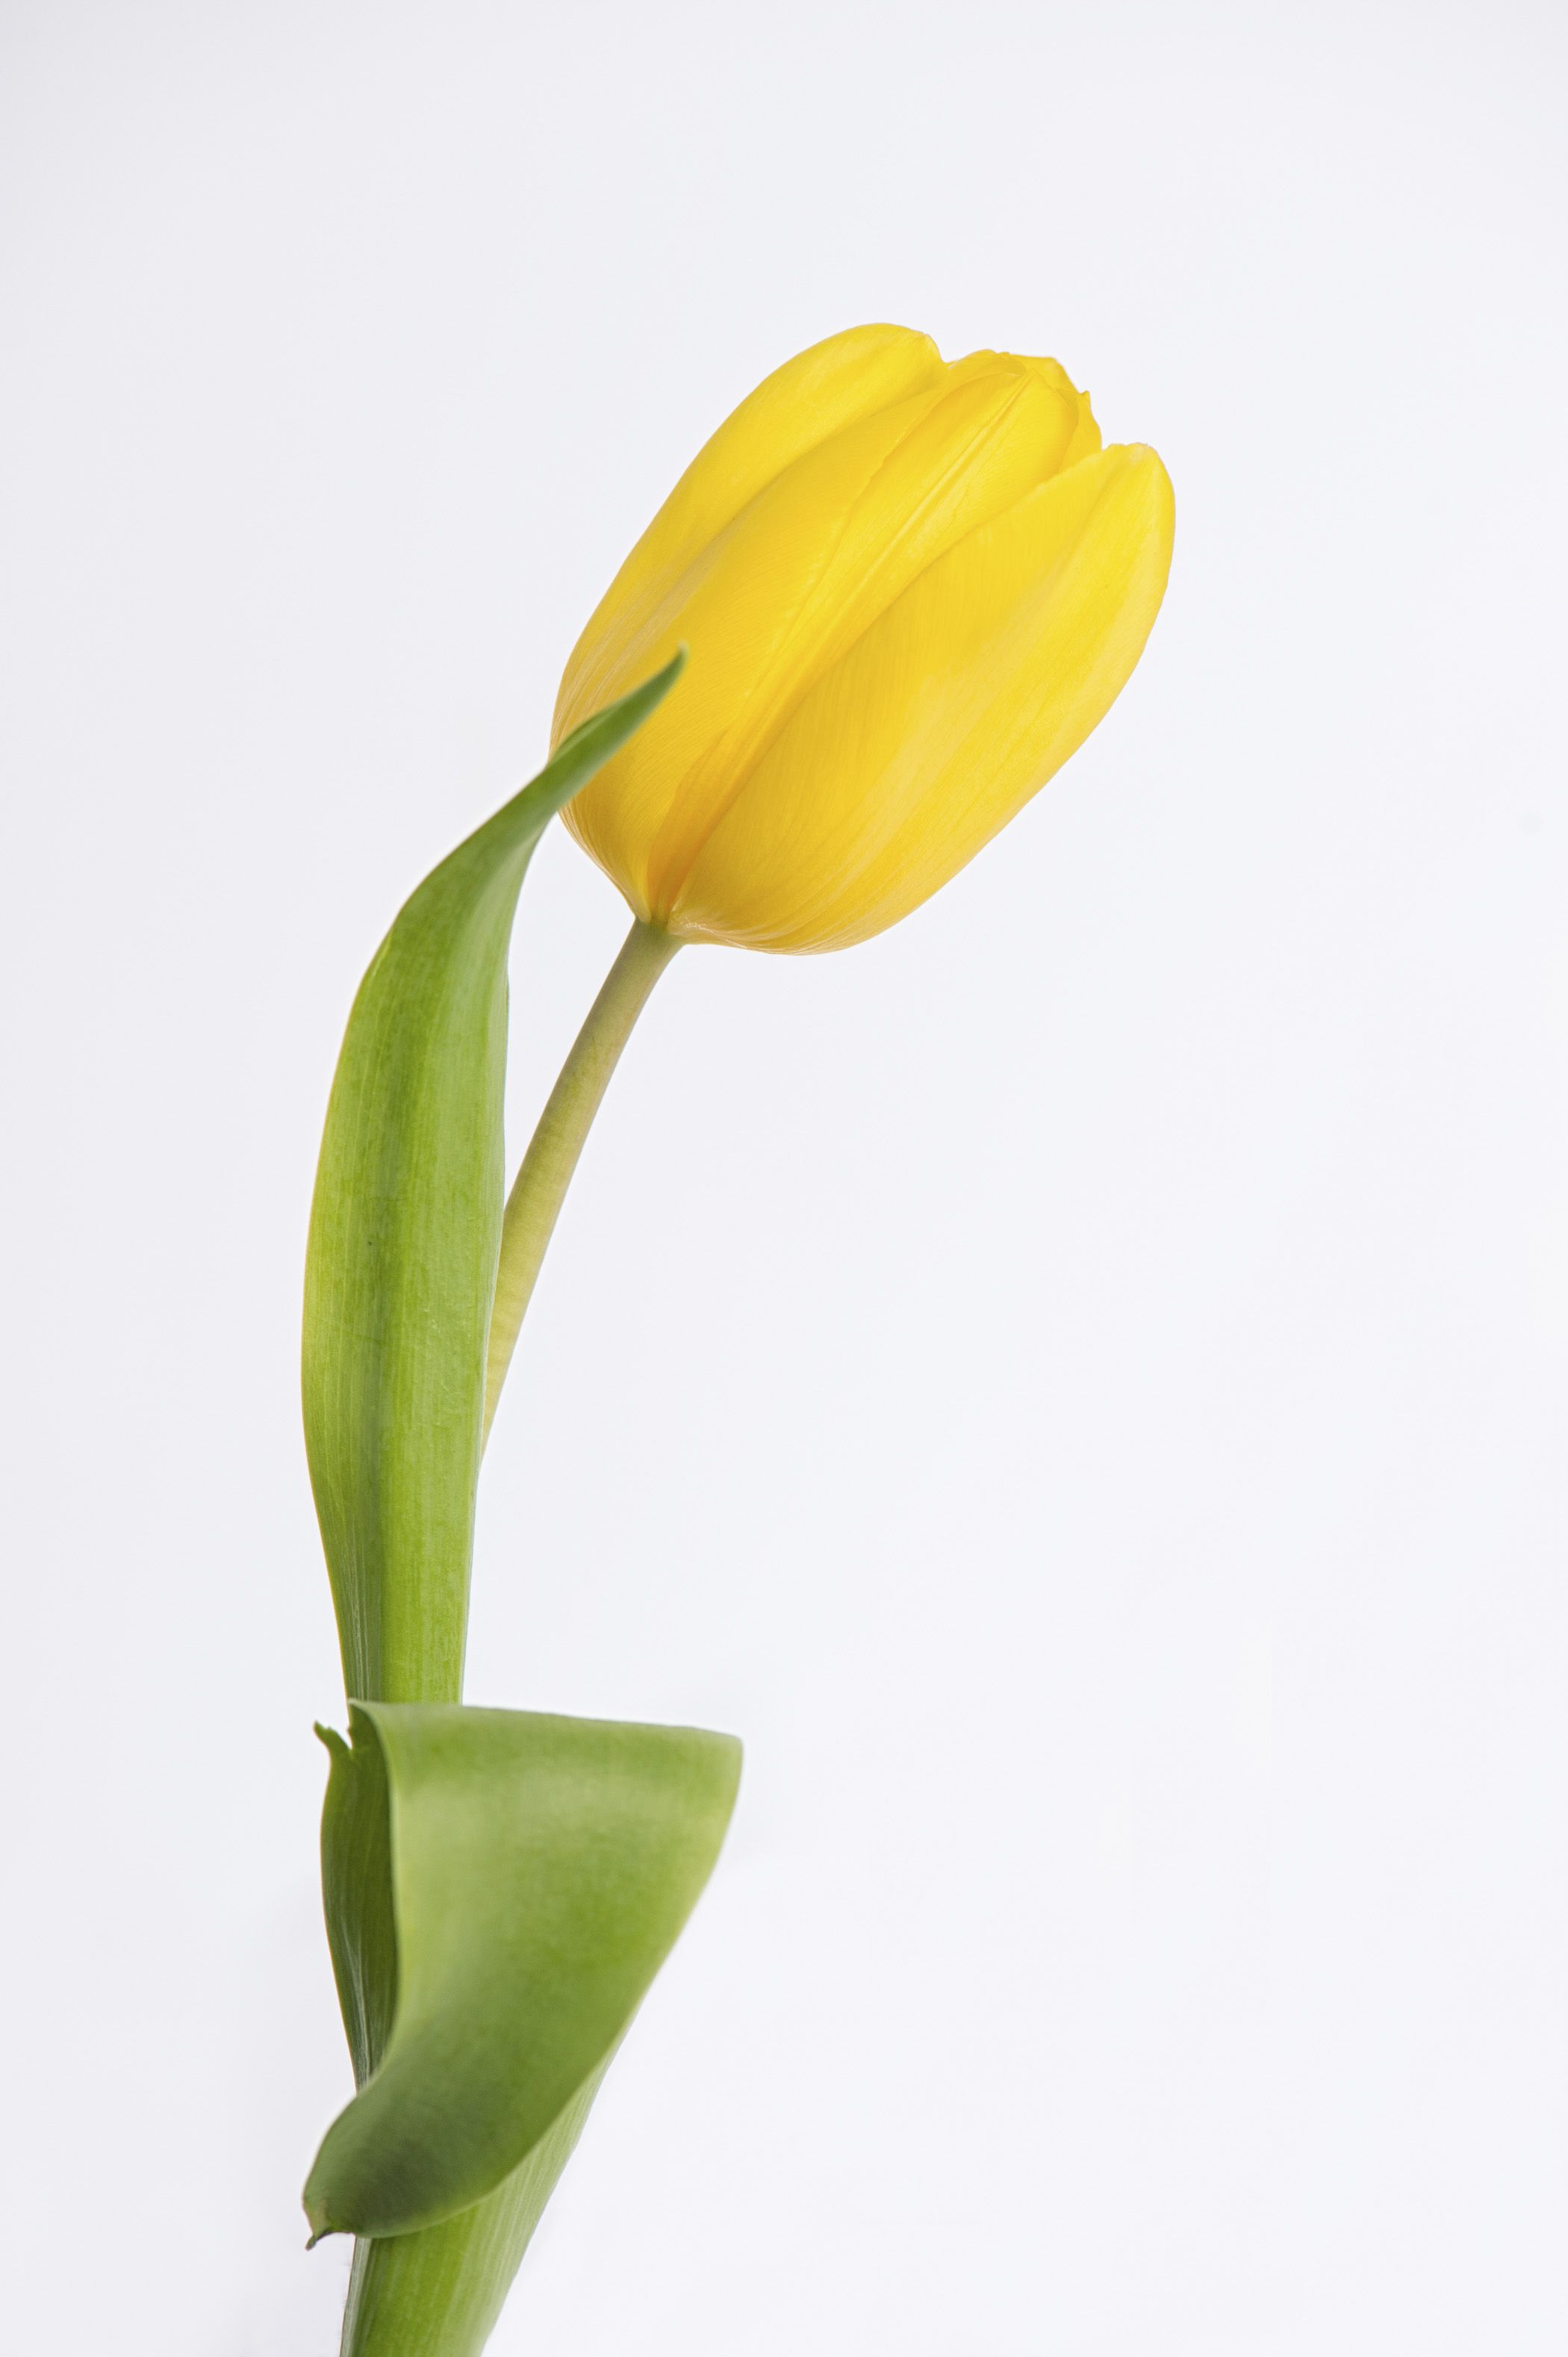 Single Yellow Tulip With White Background Copyright Nancy